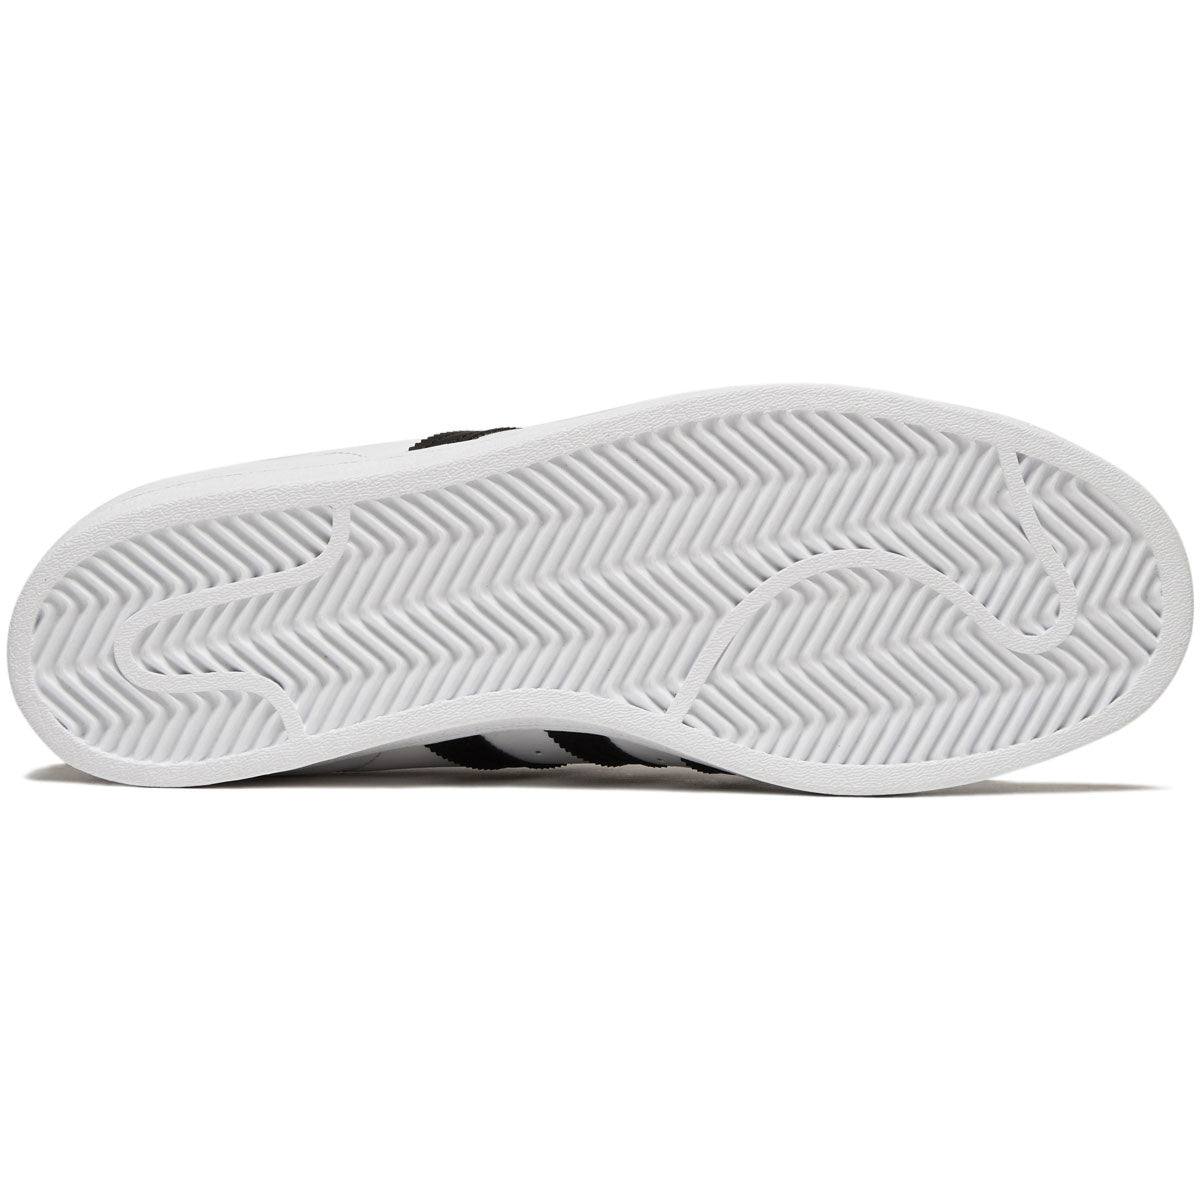 Adidas Superstar Adv Shoes - White/Core Black/White image 4